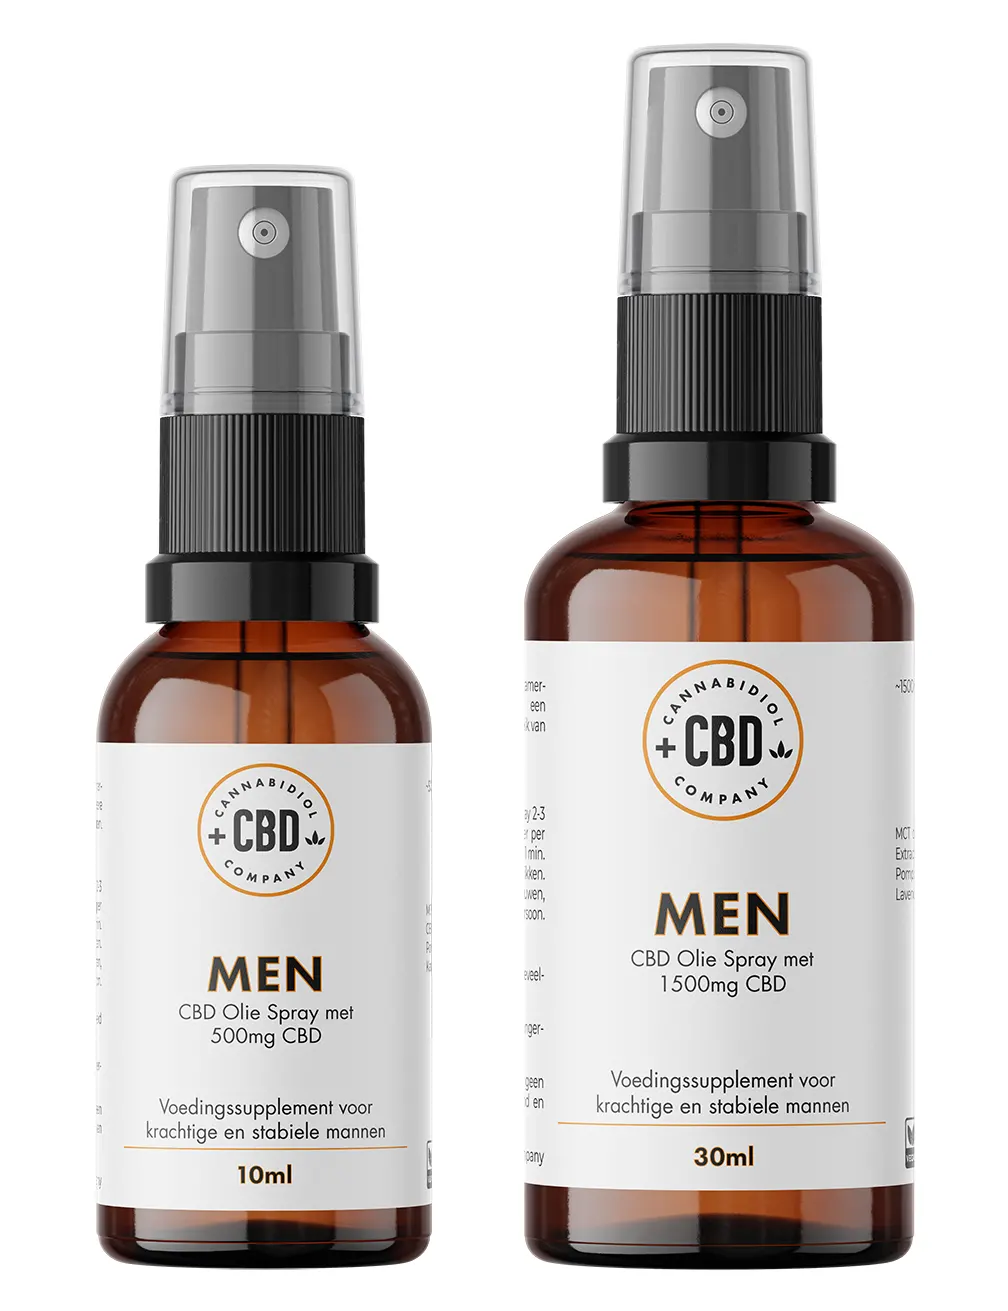 Men CBD Spray, cbd supplement voor mannen